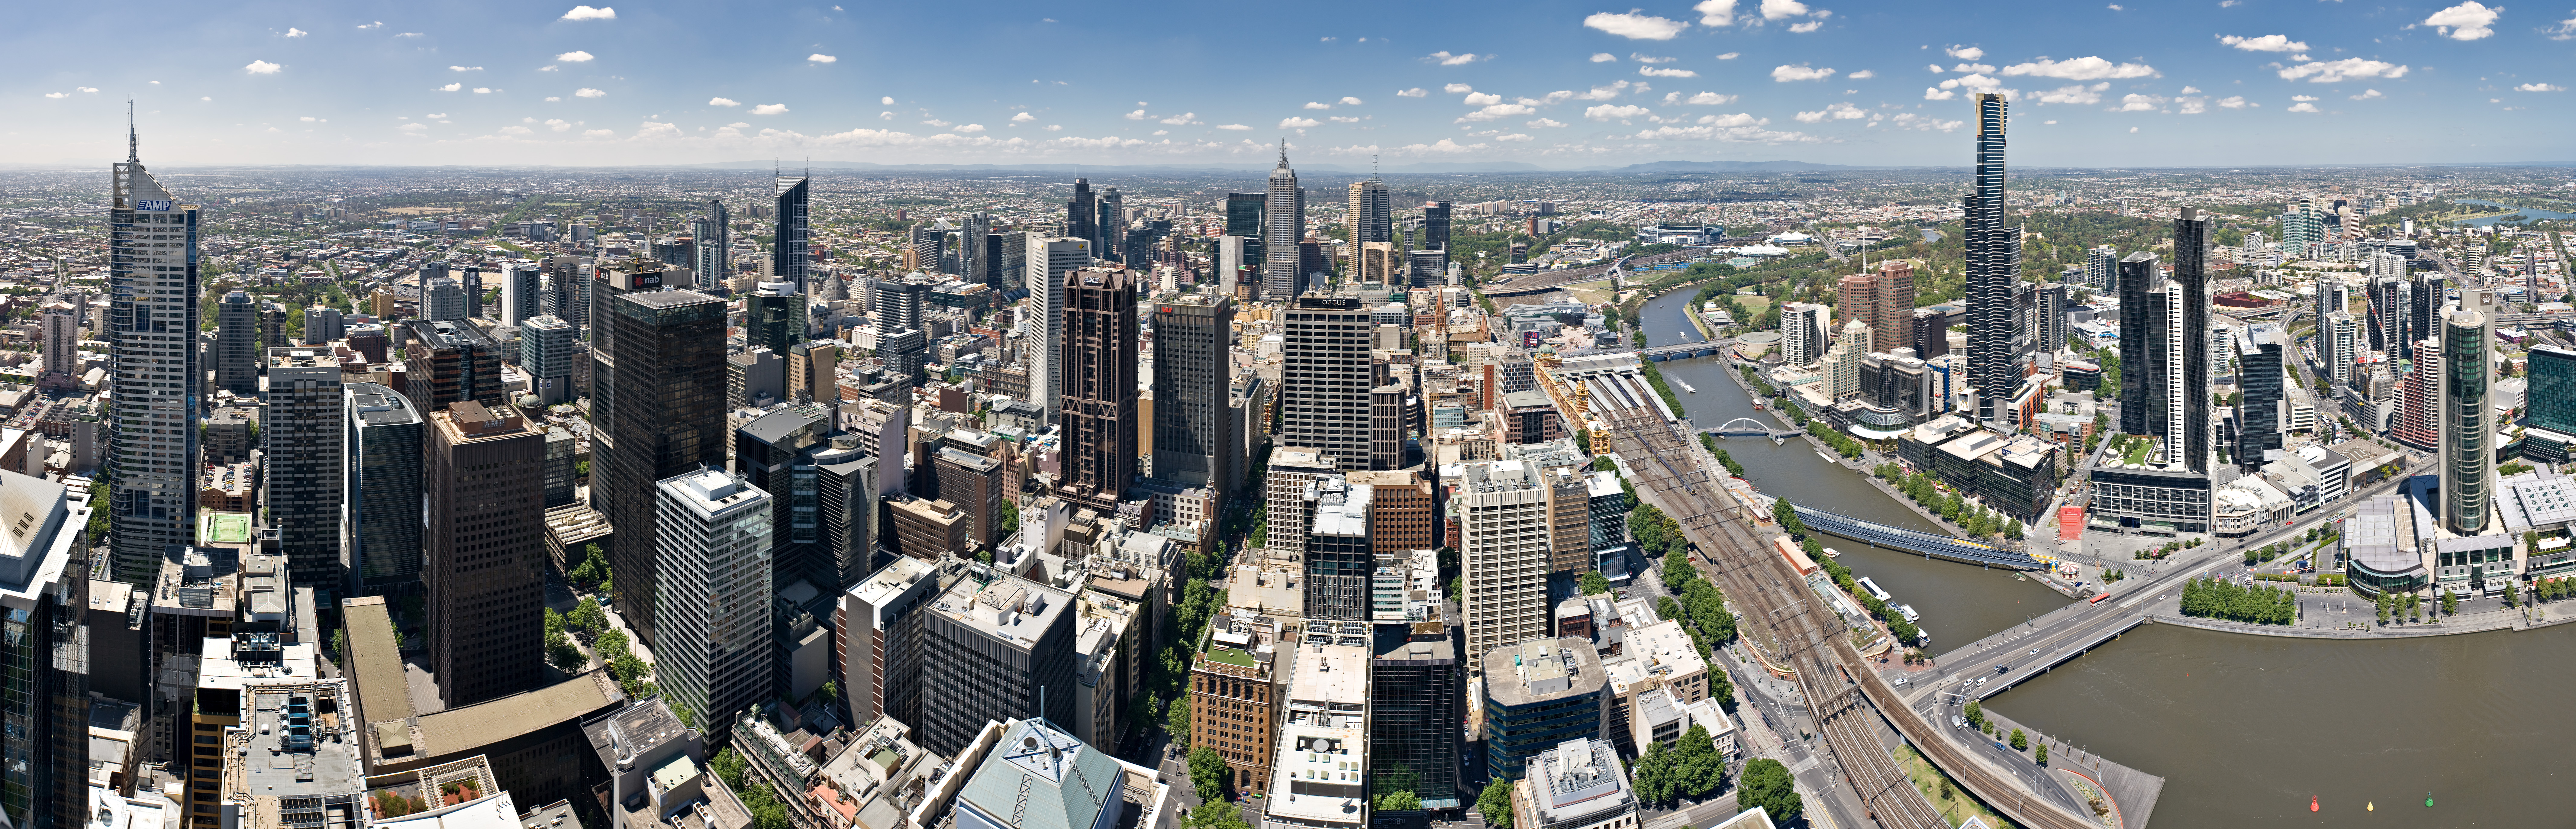 File:Melbourne Skyline from Rialto Crop - Nov 2008.jpg - Wikipedia